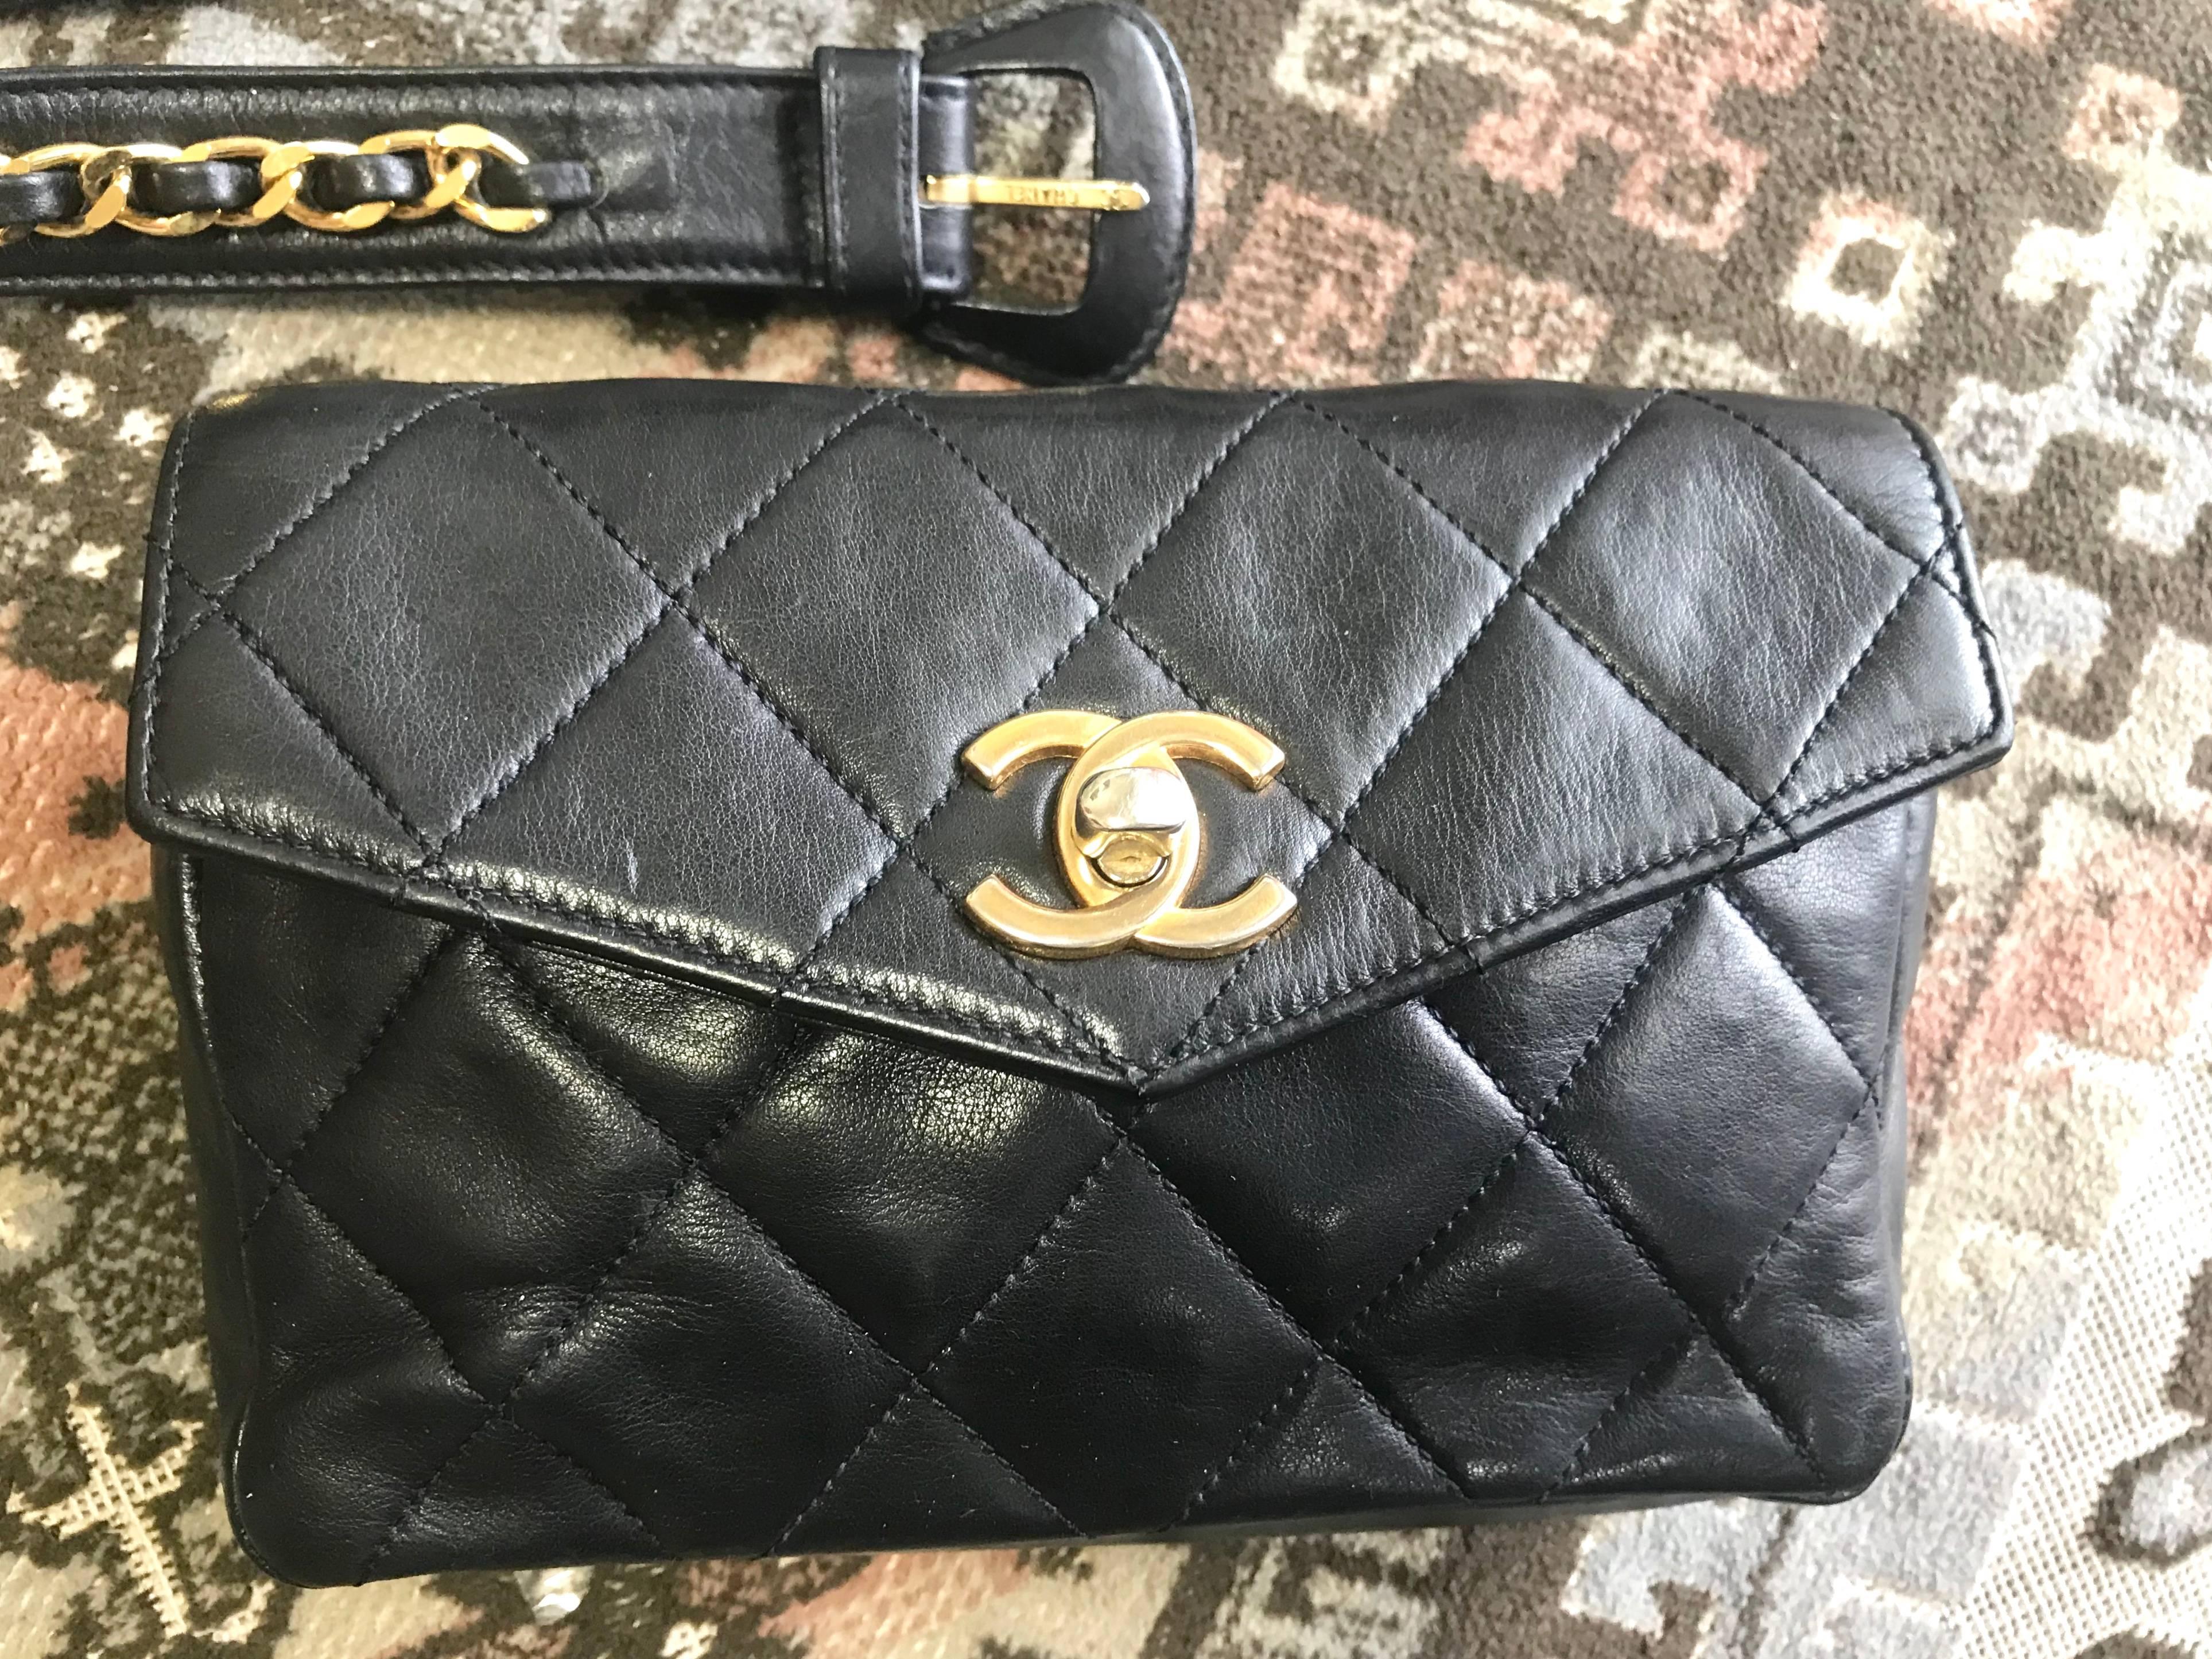 1980s. Vintage CHANEL black lamb leather waist bag, fanny pack with golden chain belt & CC closure. Belt size good for 24